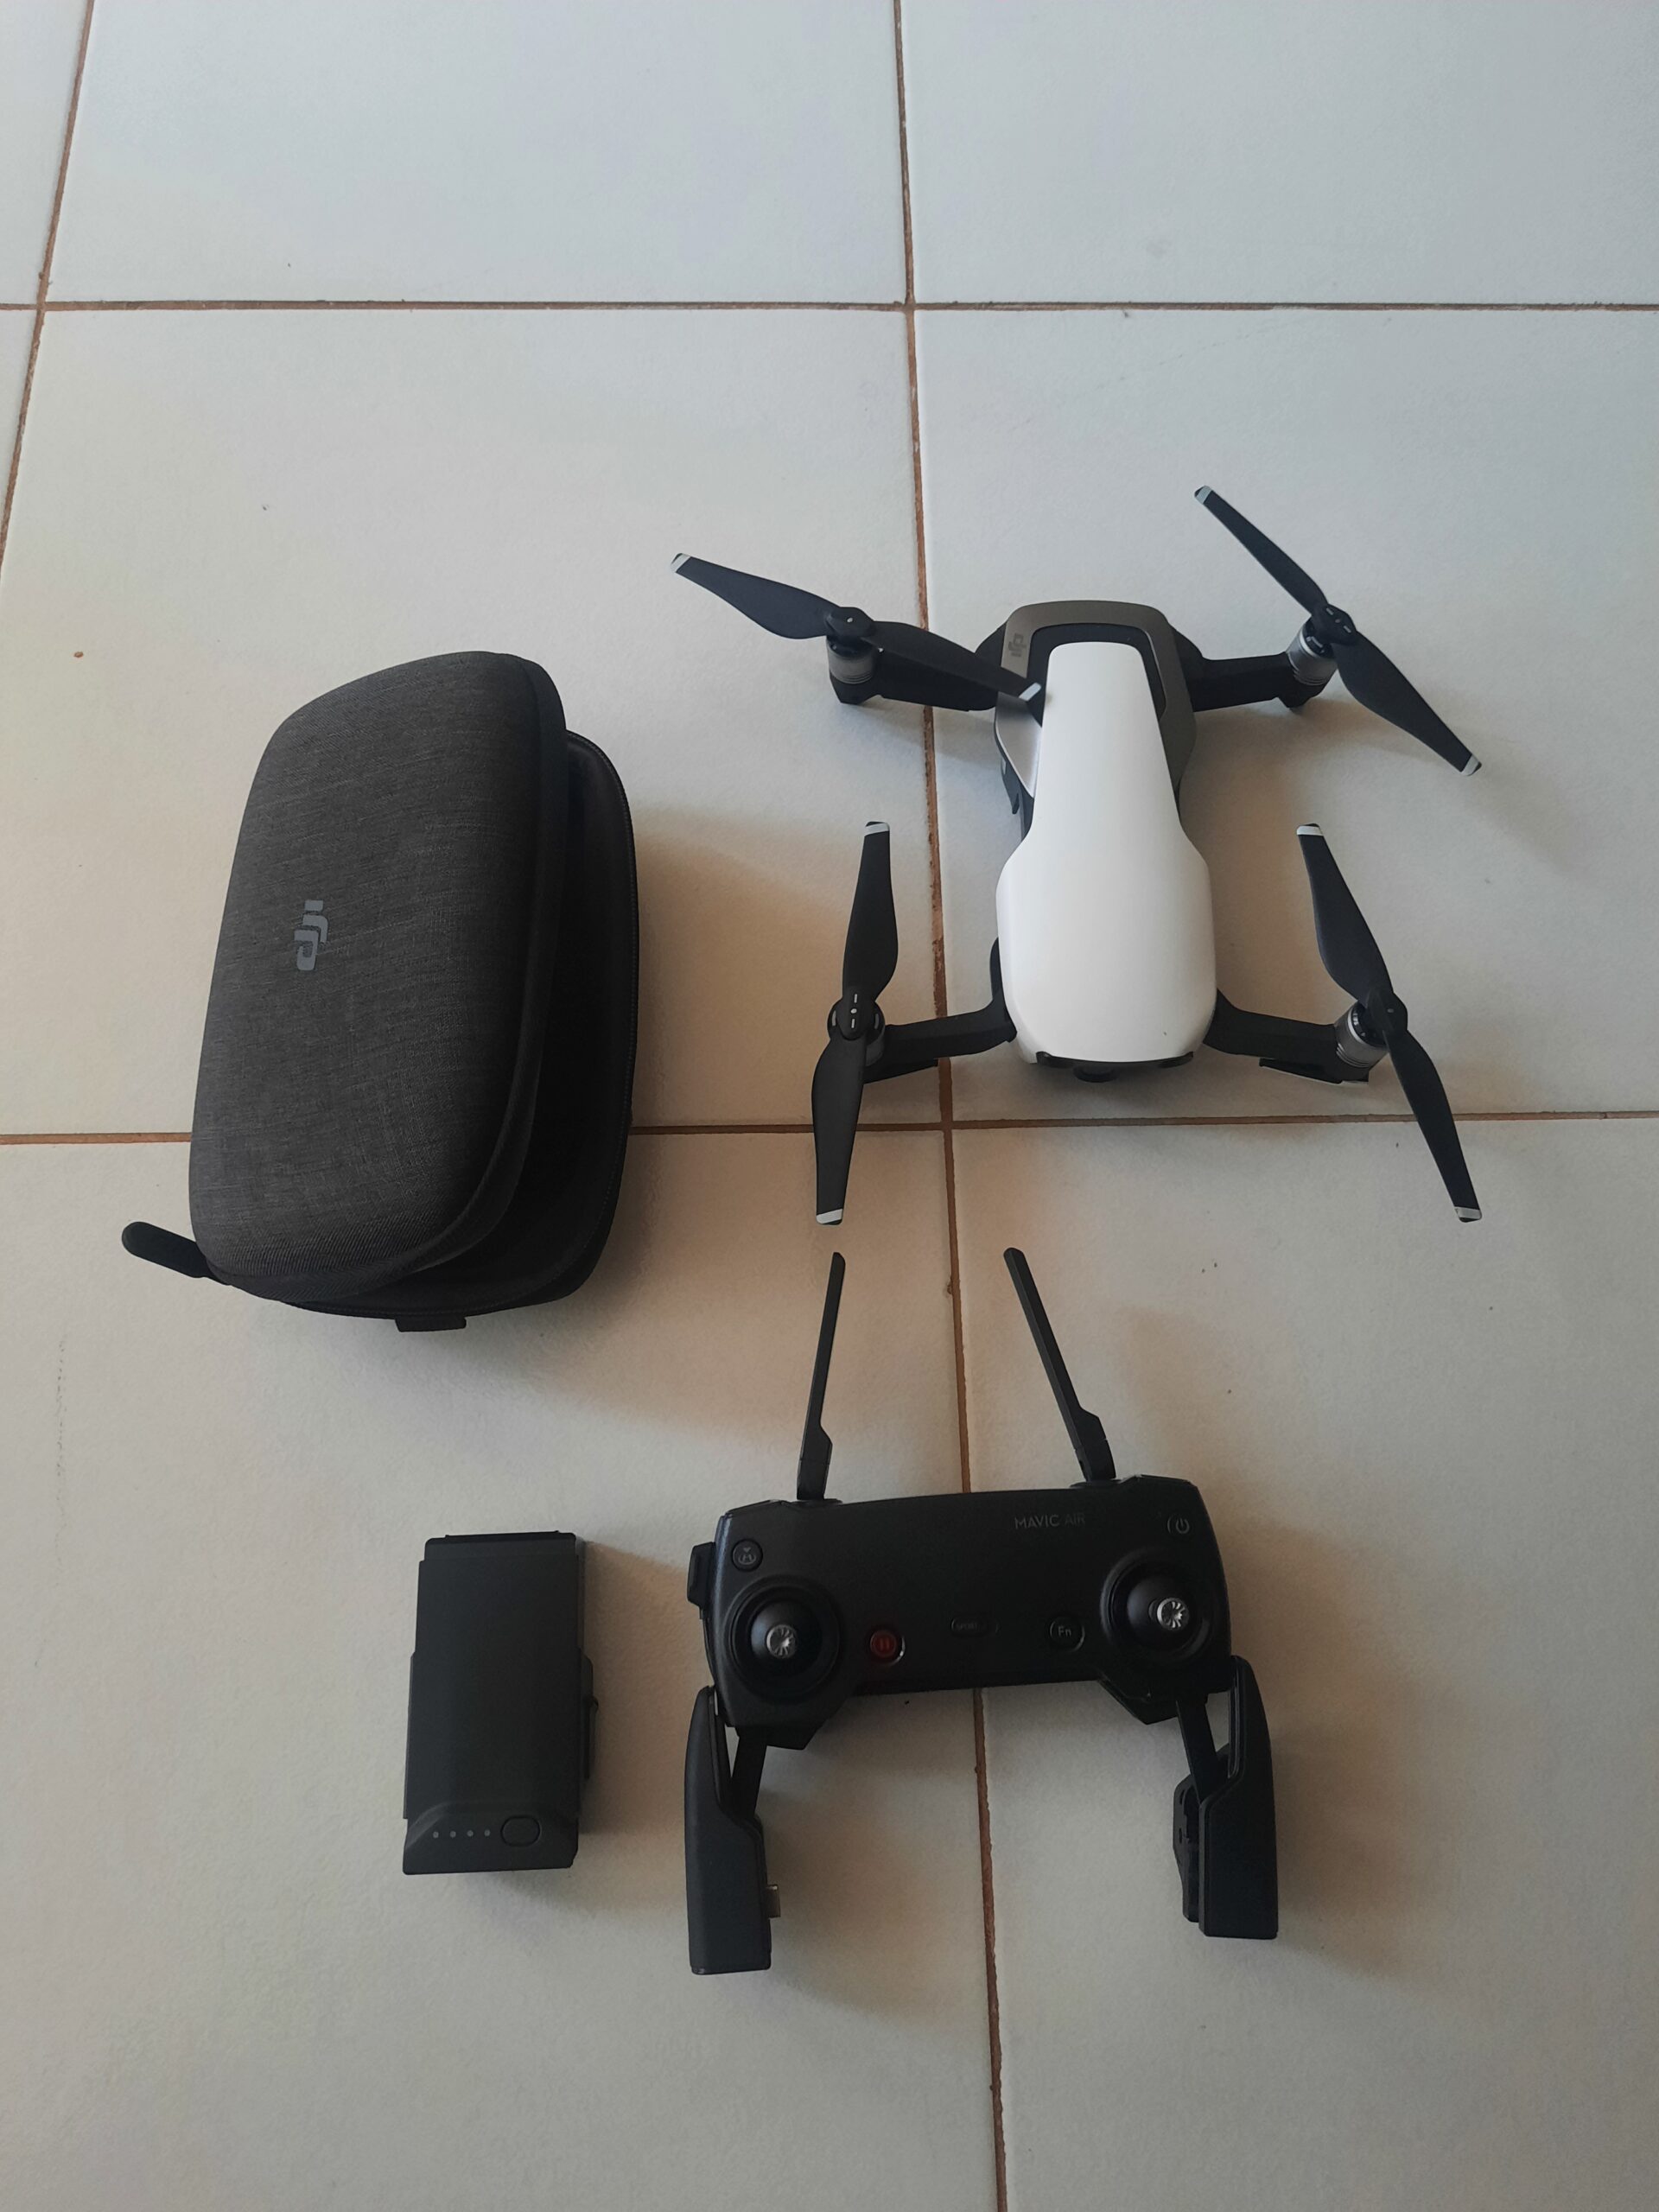 Dji mavic air drone with 4k camera,